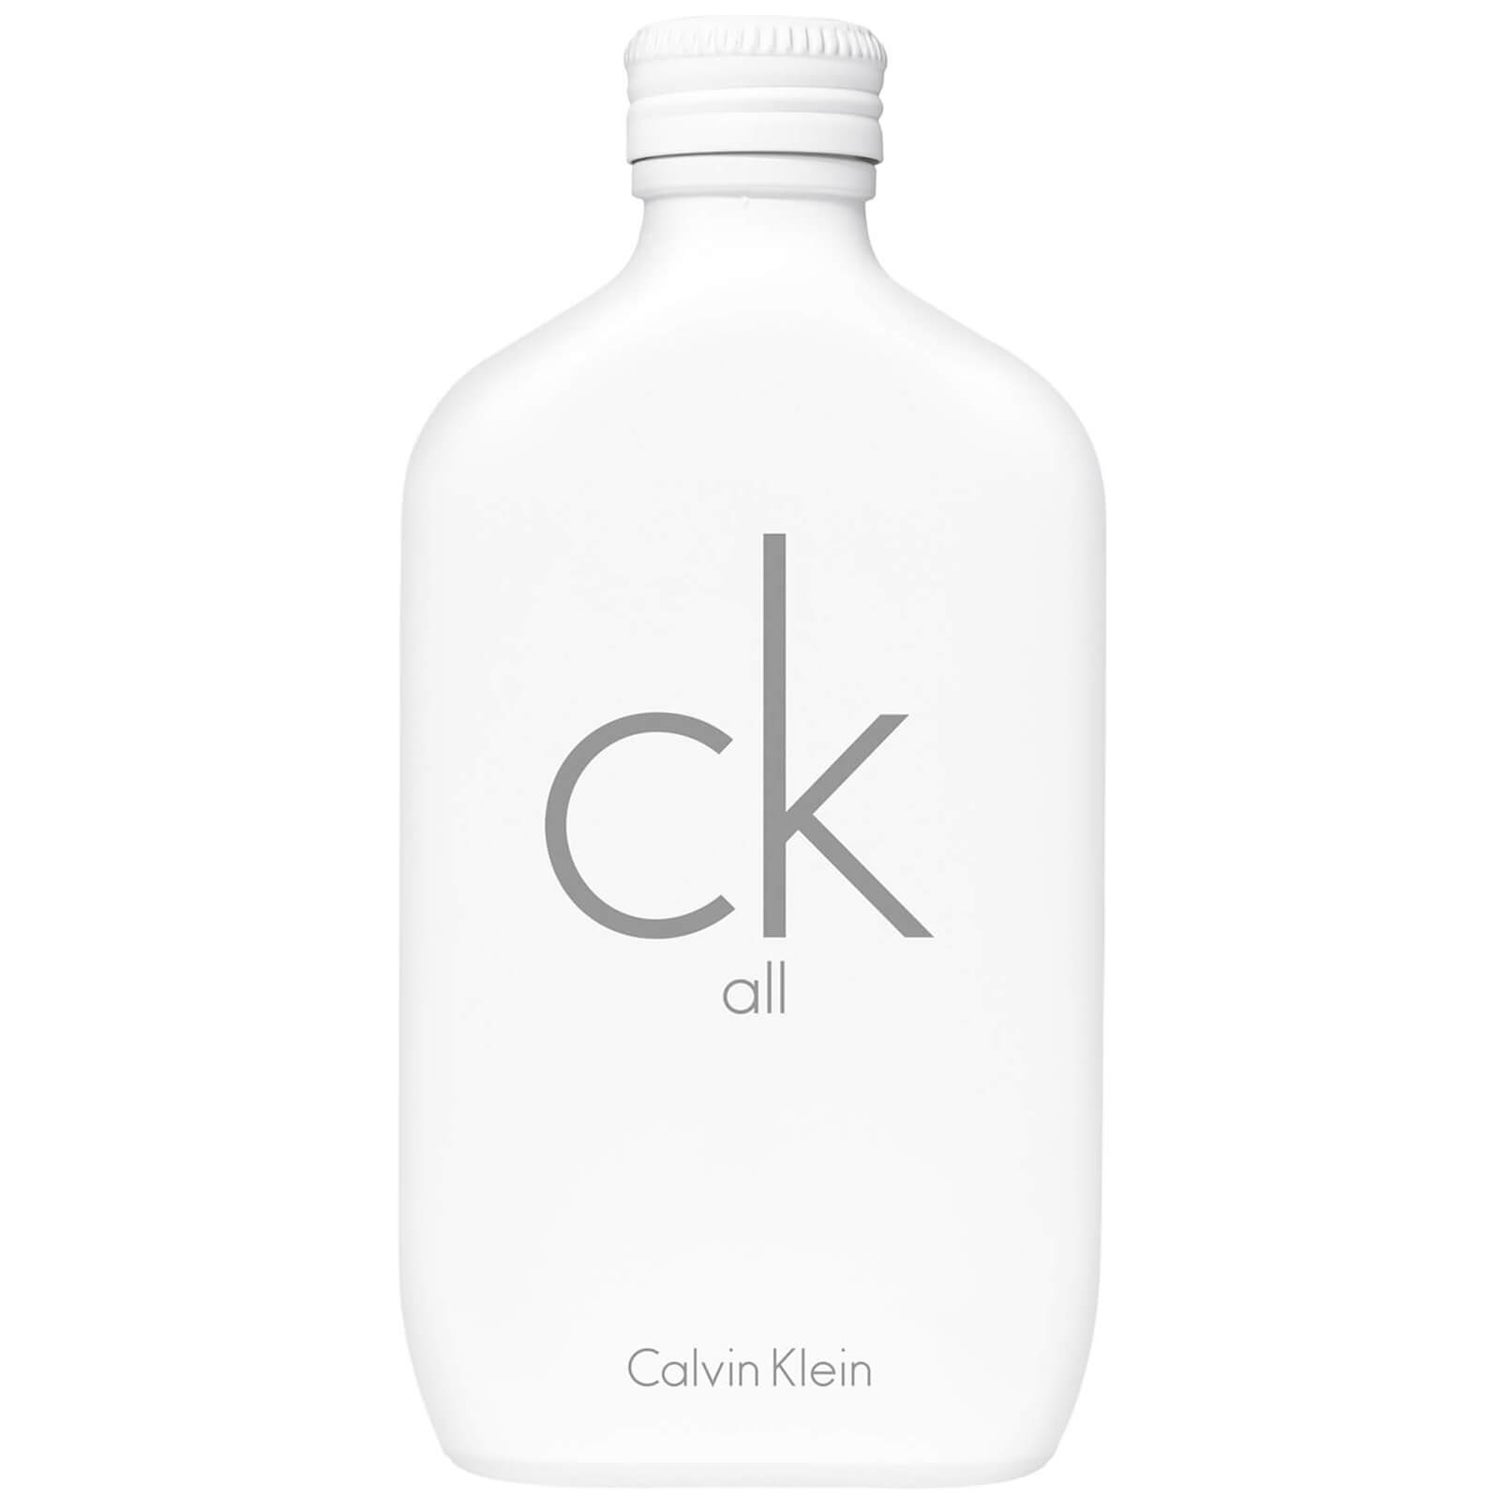 Calvin Klein CK All Eau de Toilette 200ml